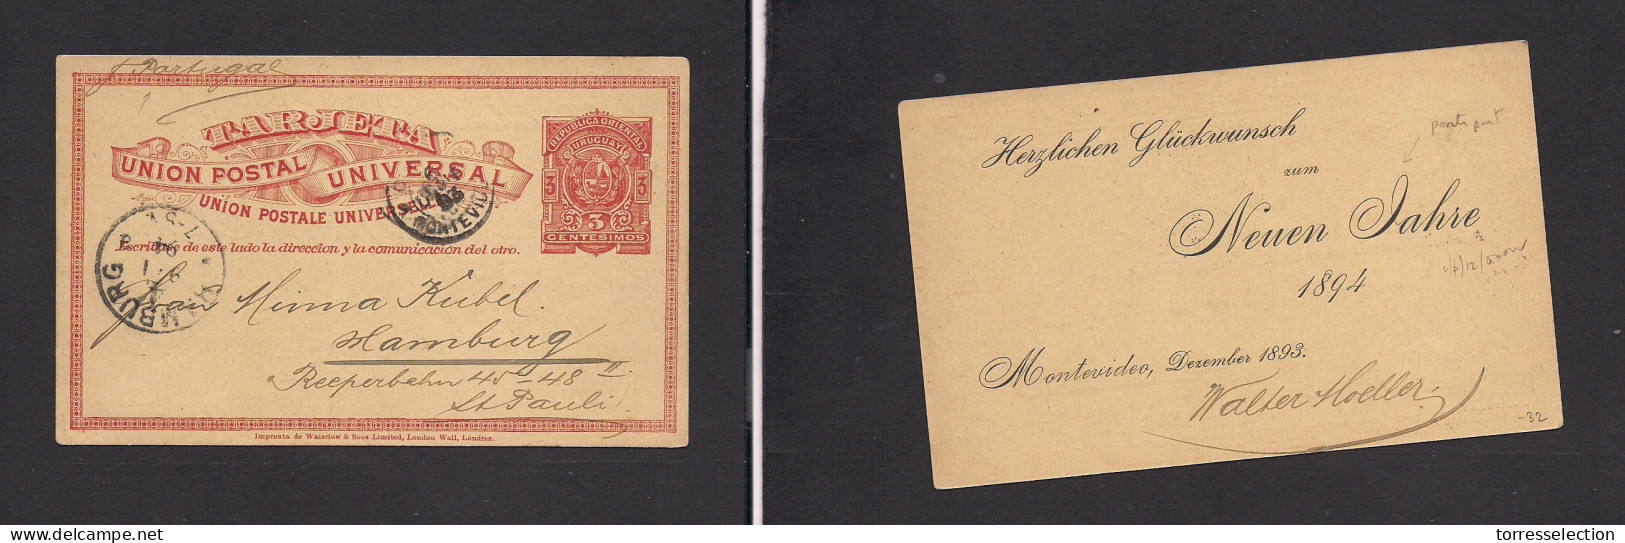 URUGUAY. 1893 (Dec) Mont - Germany, Hamburg (9 Jan 94) 3c Red / Green Stat Card. VF Used. XSALE. - Uruguay